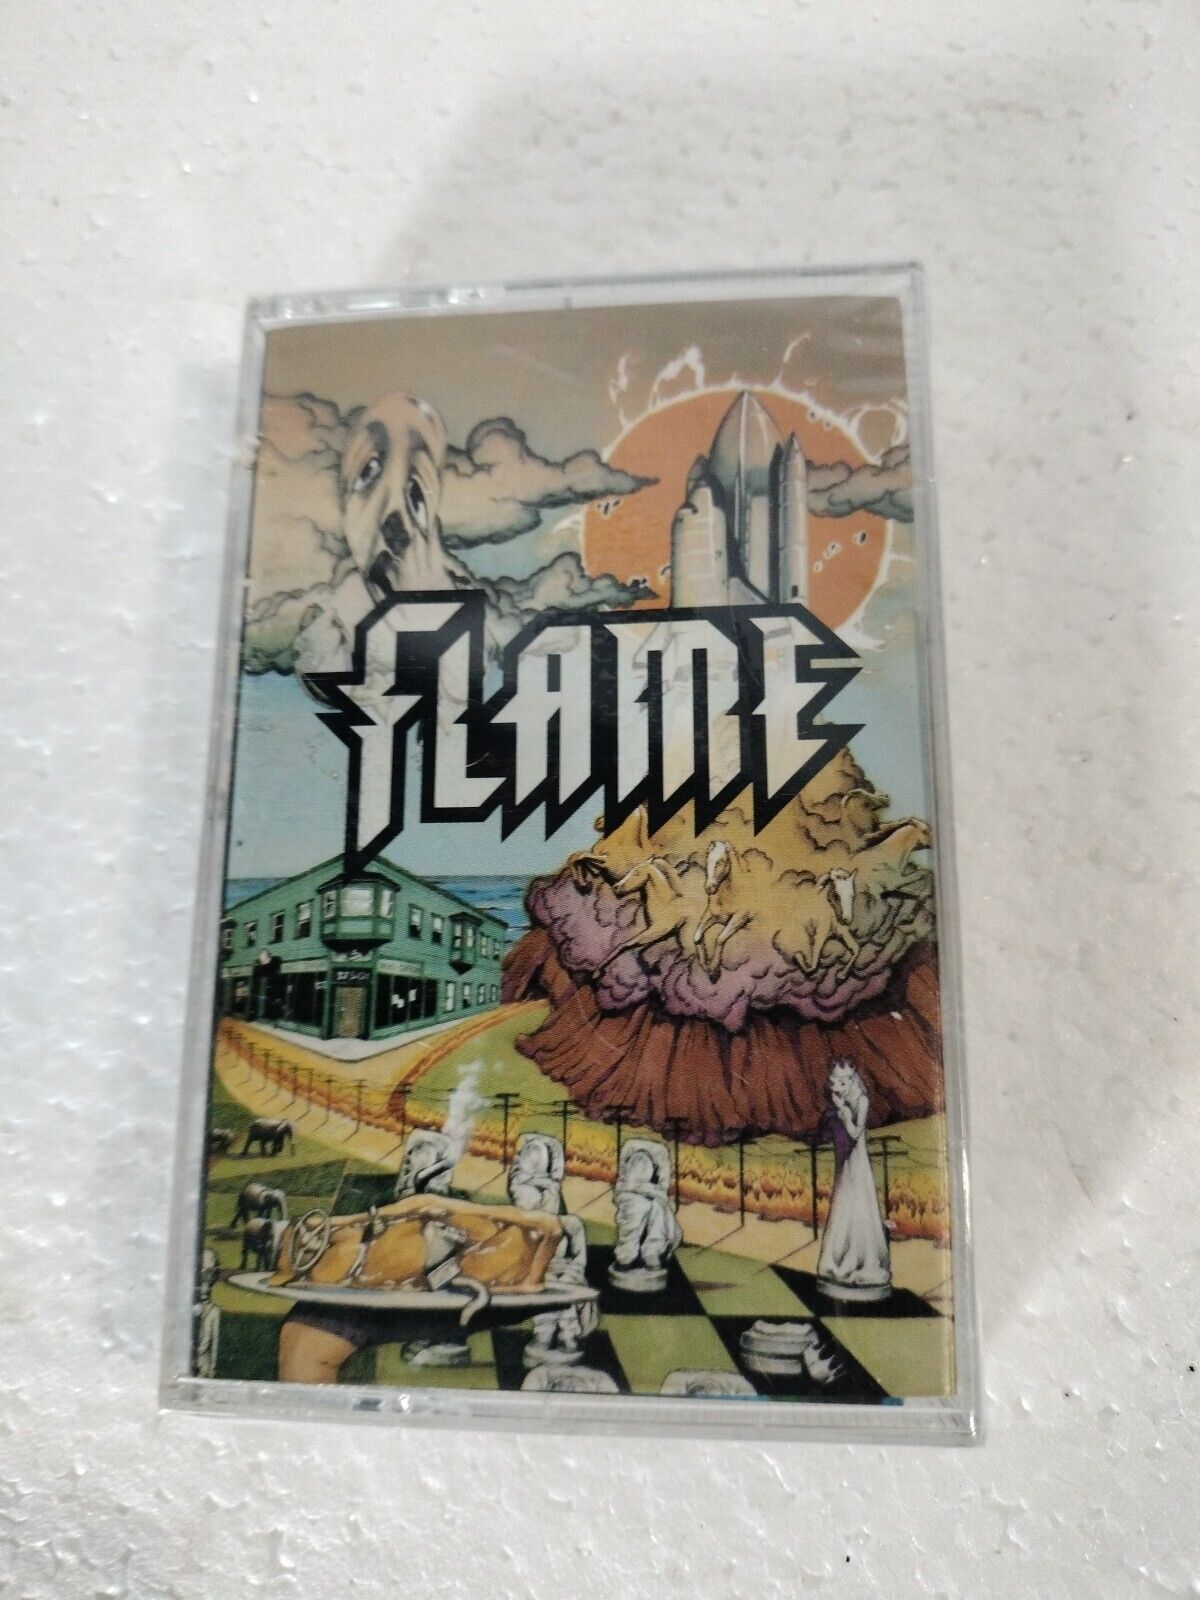 VTG 1992 Cassette Tape Flame Self Titled Album Giant Records Sealed Promo Copy 